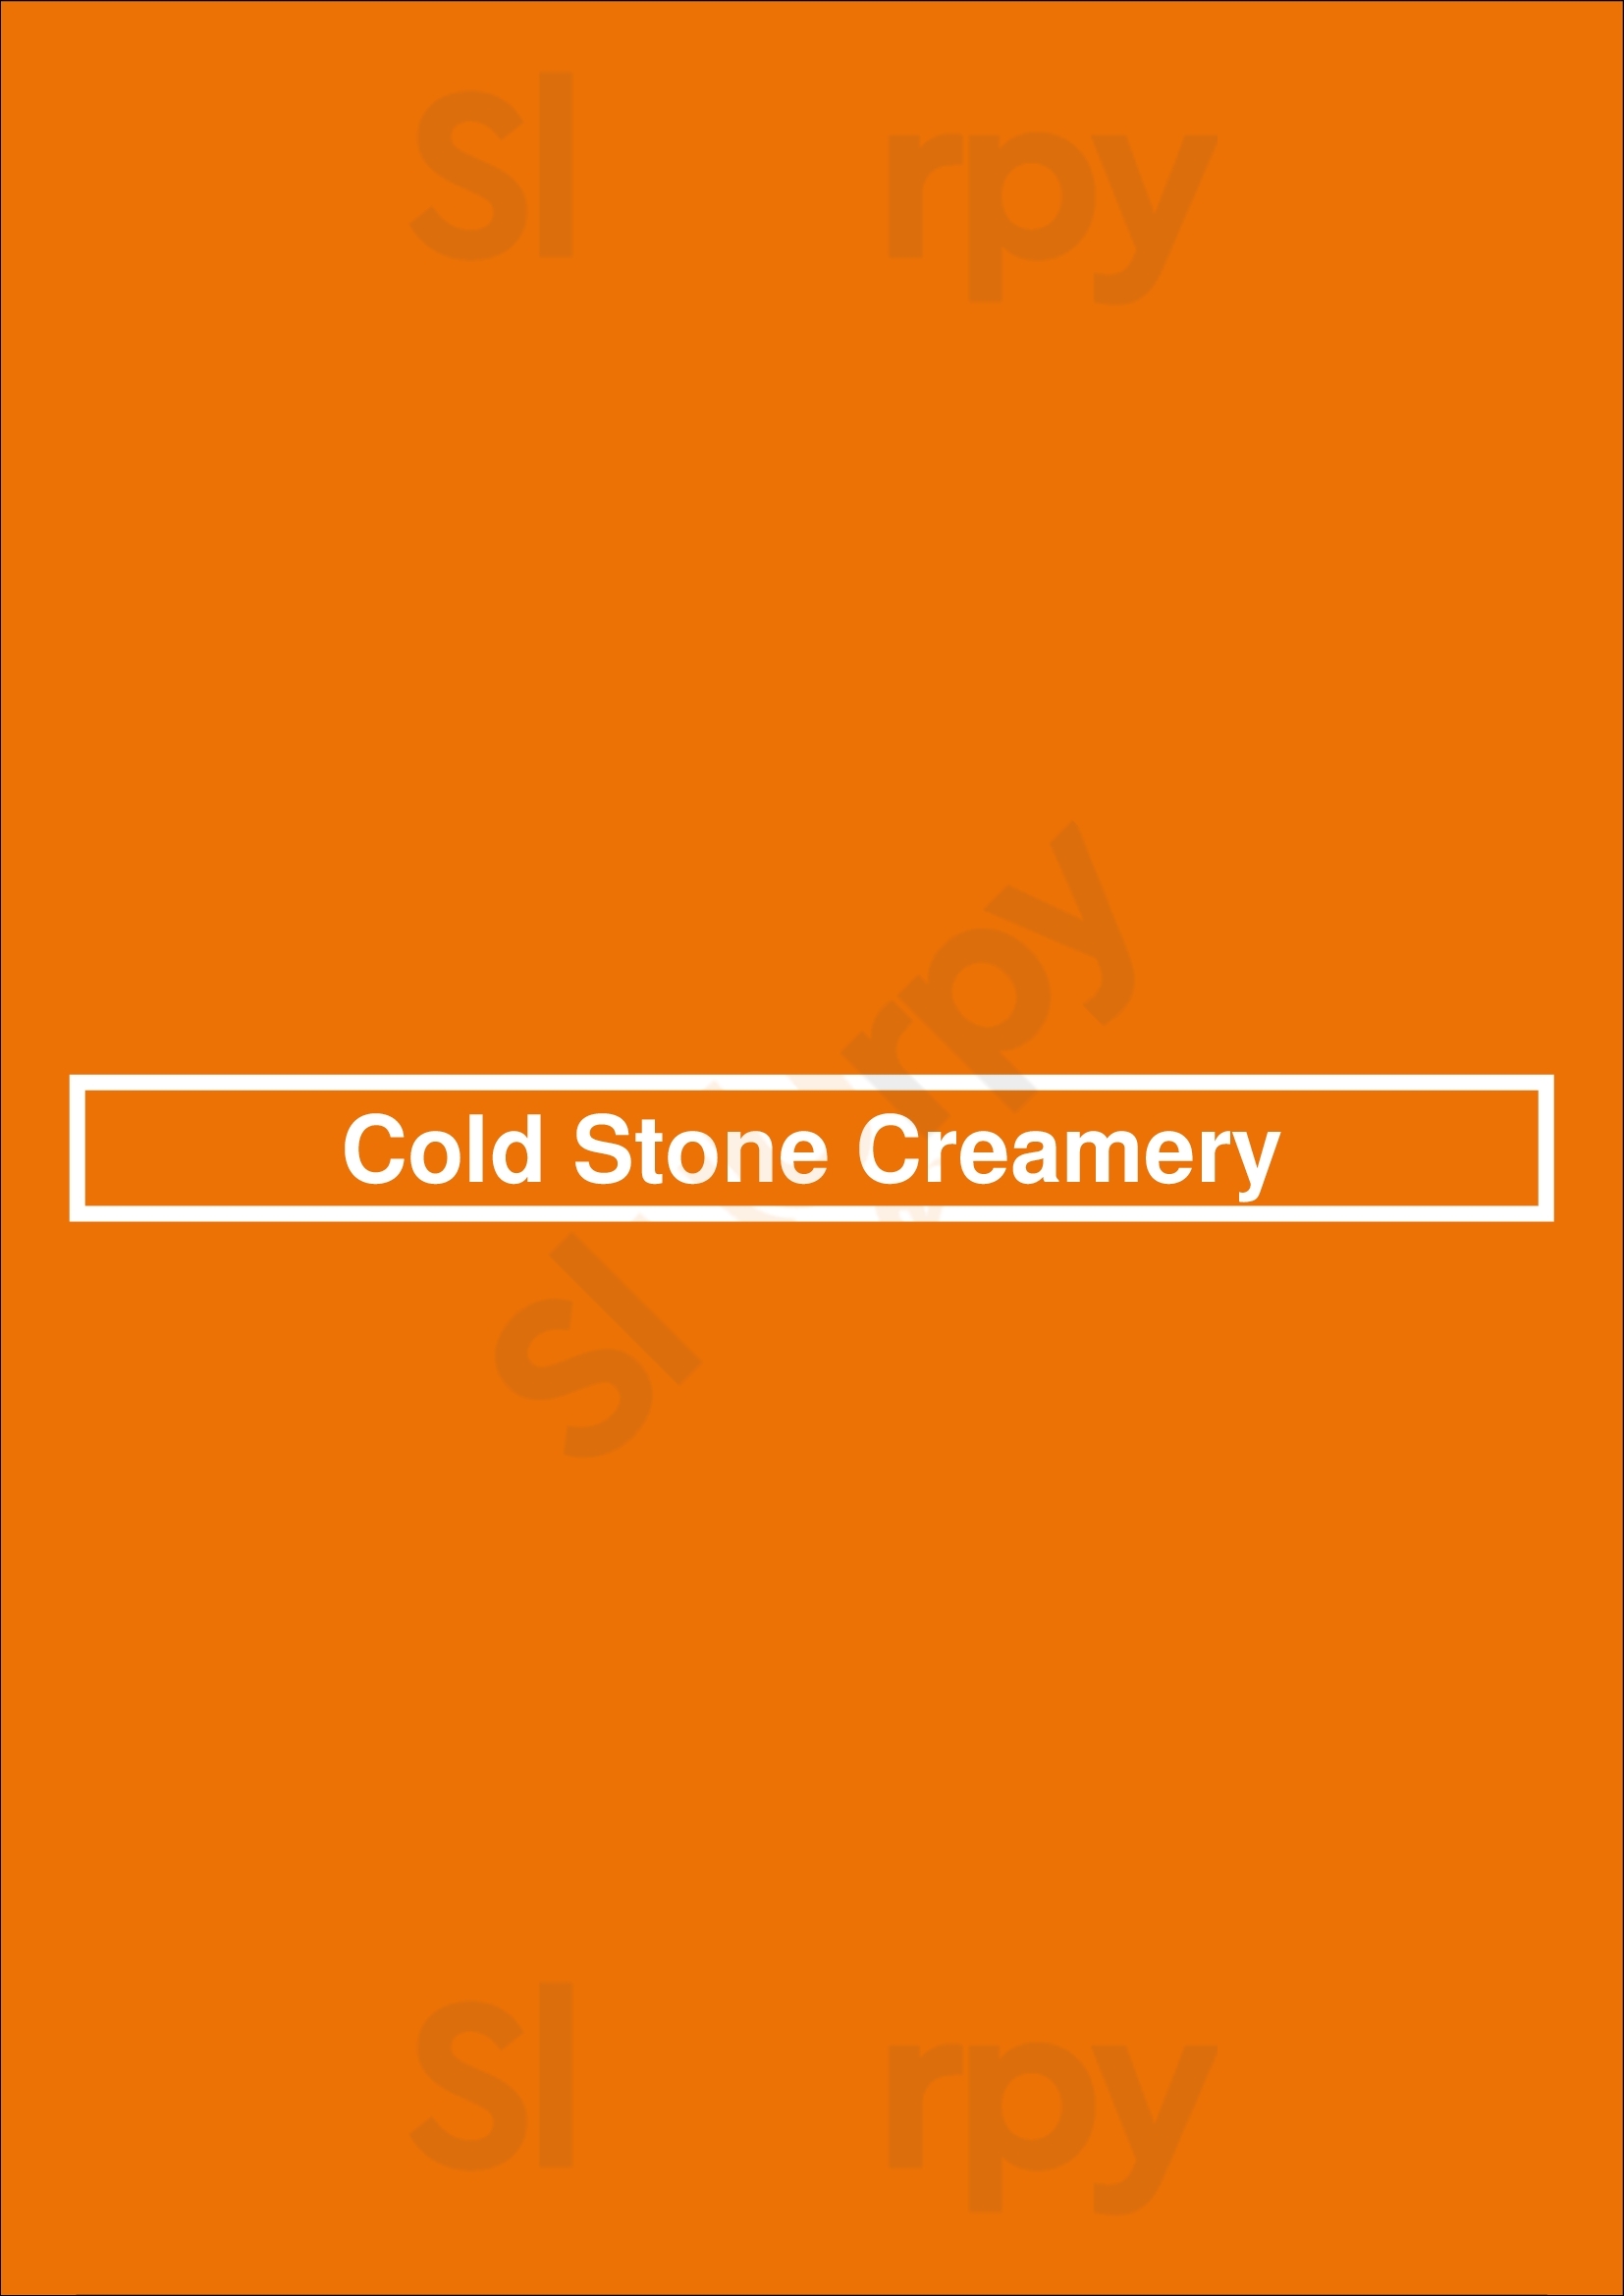 Cold Stone Creamery Schaumburg Menu - 1